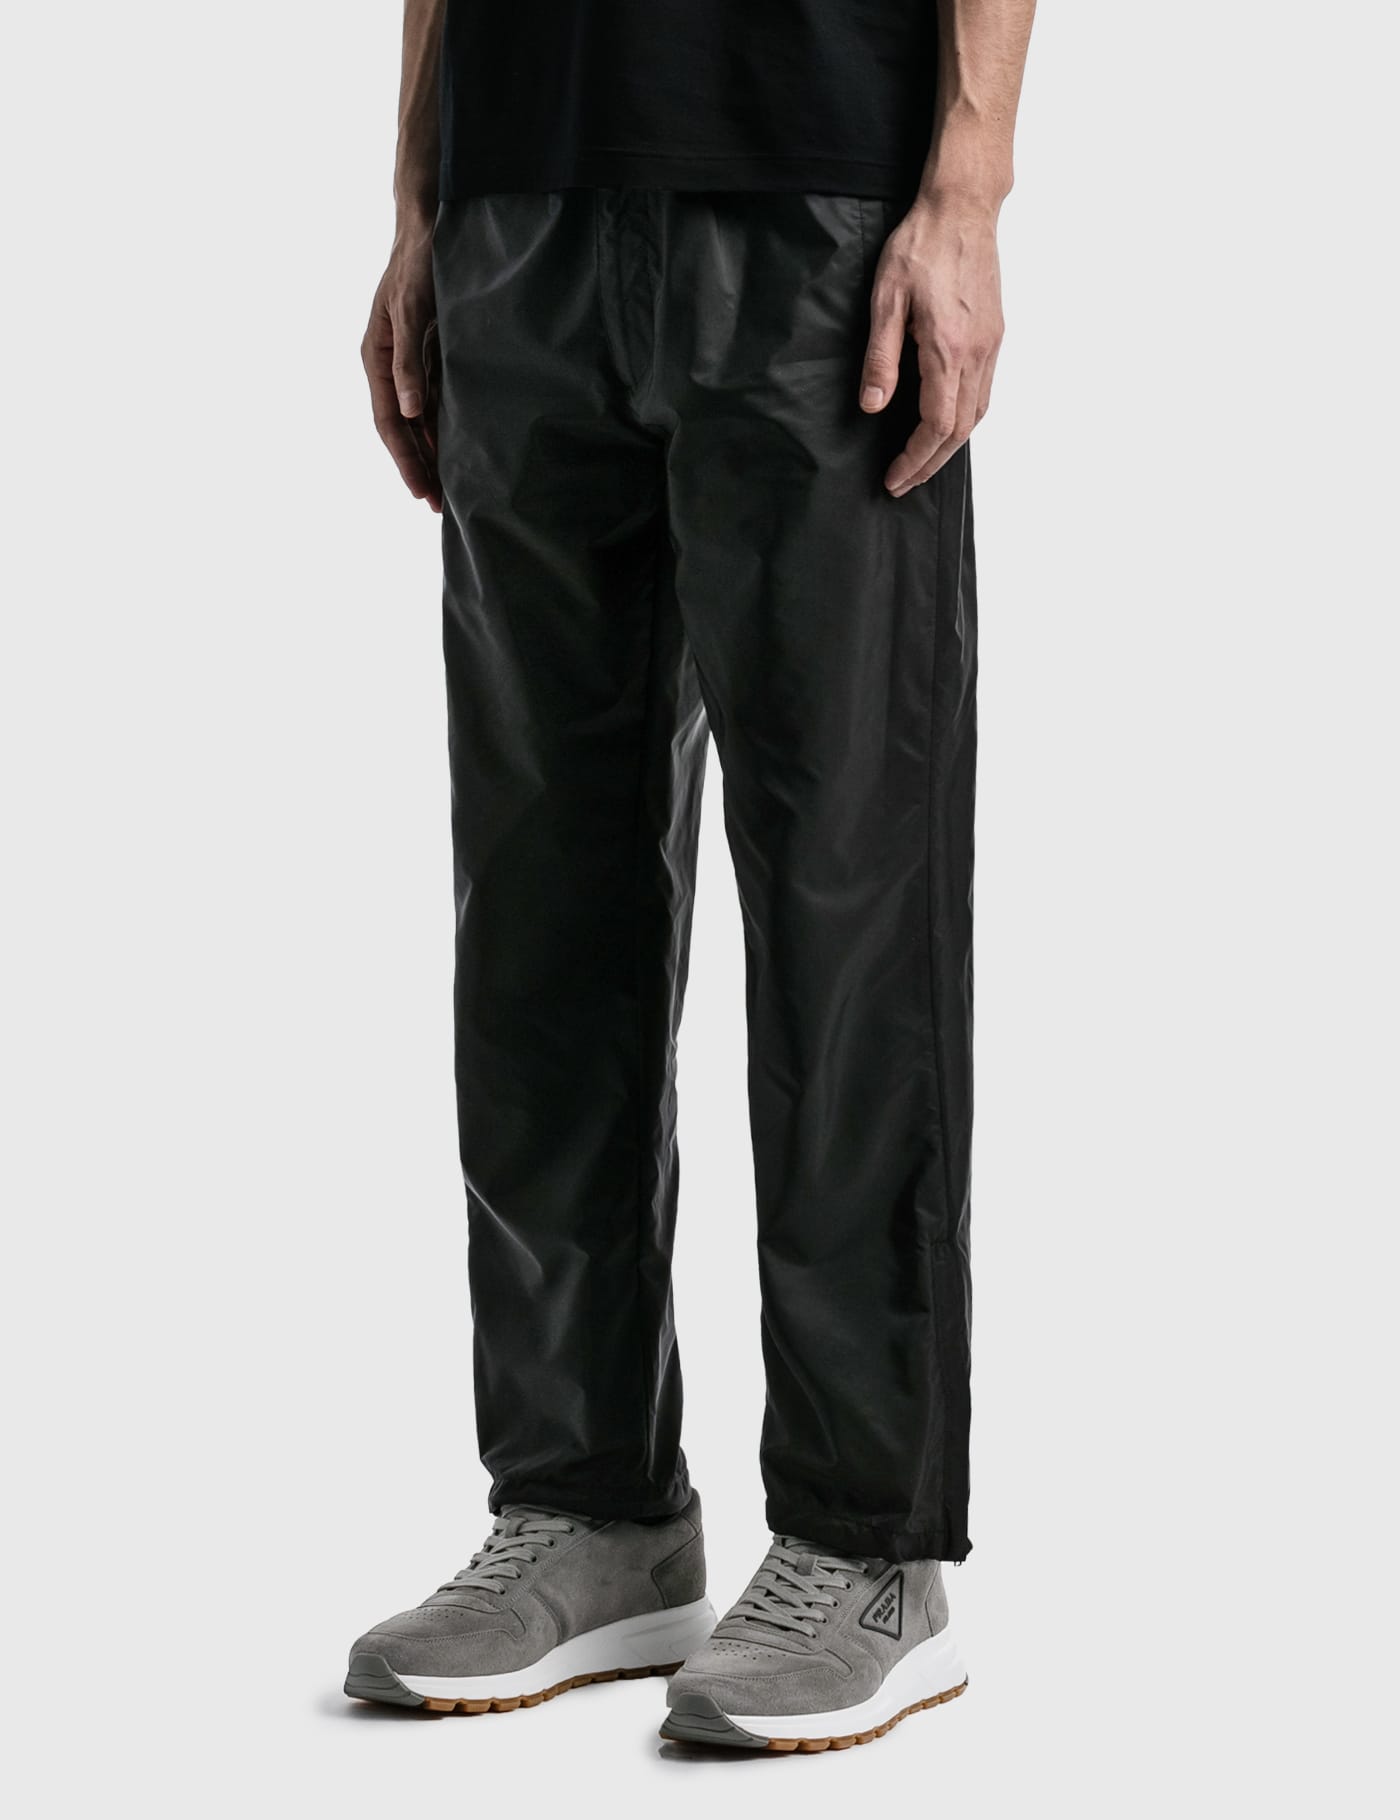 Prada Nylon Sweatpants on Sale, UP TO 64% OFF | www 